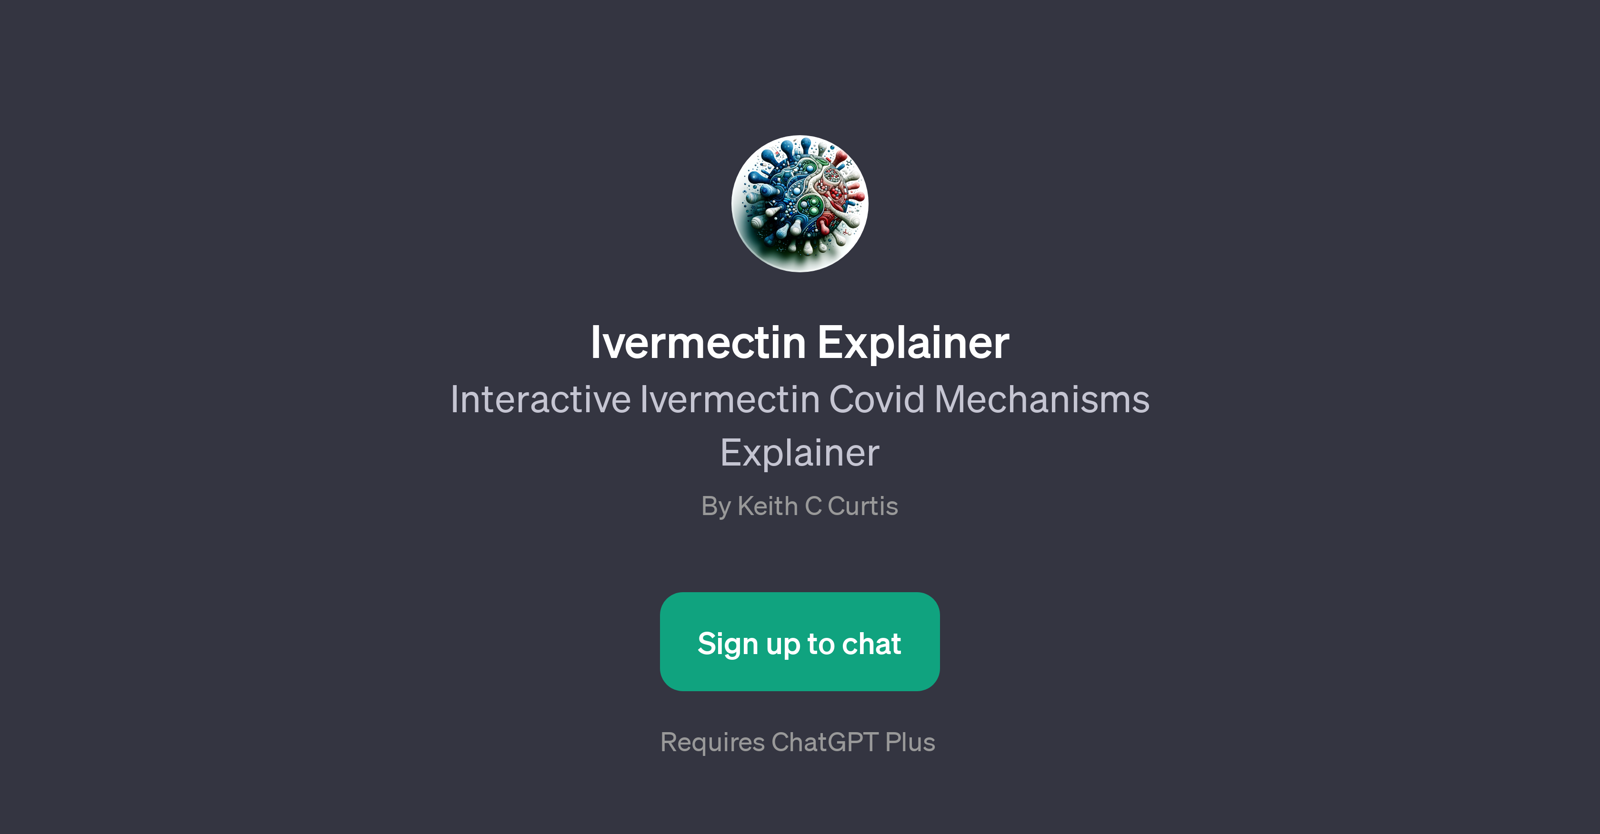 Ivermectin Explainer website